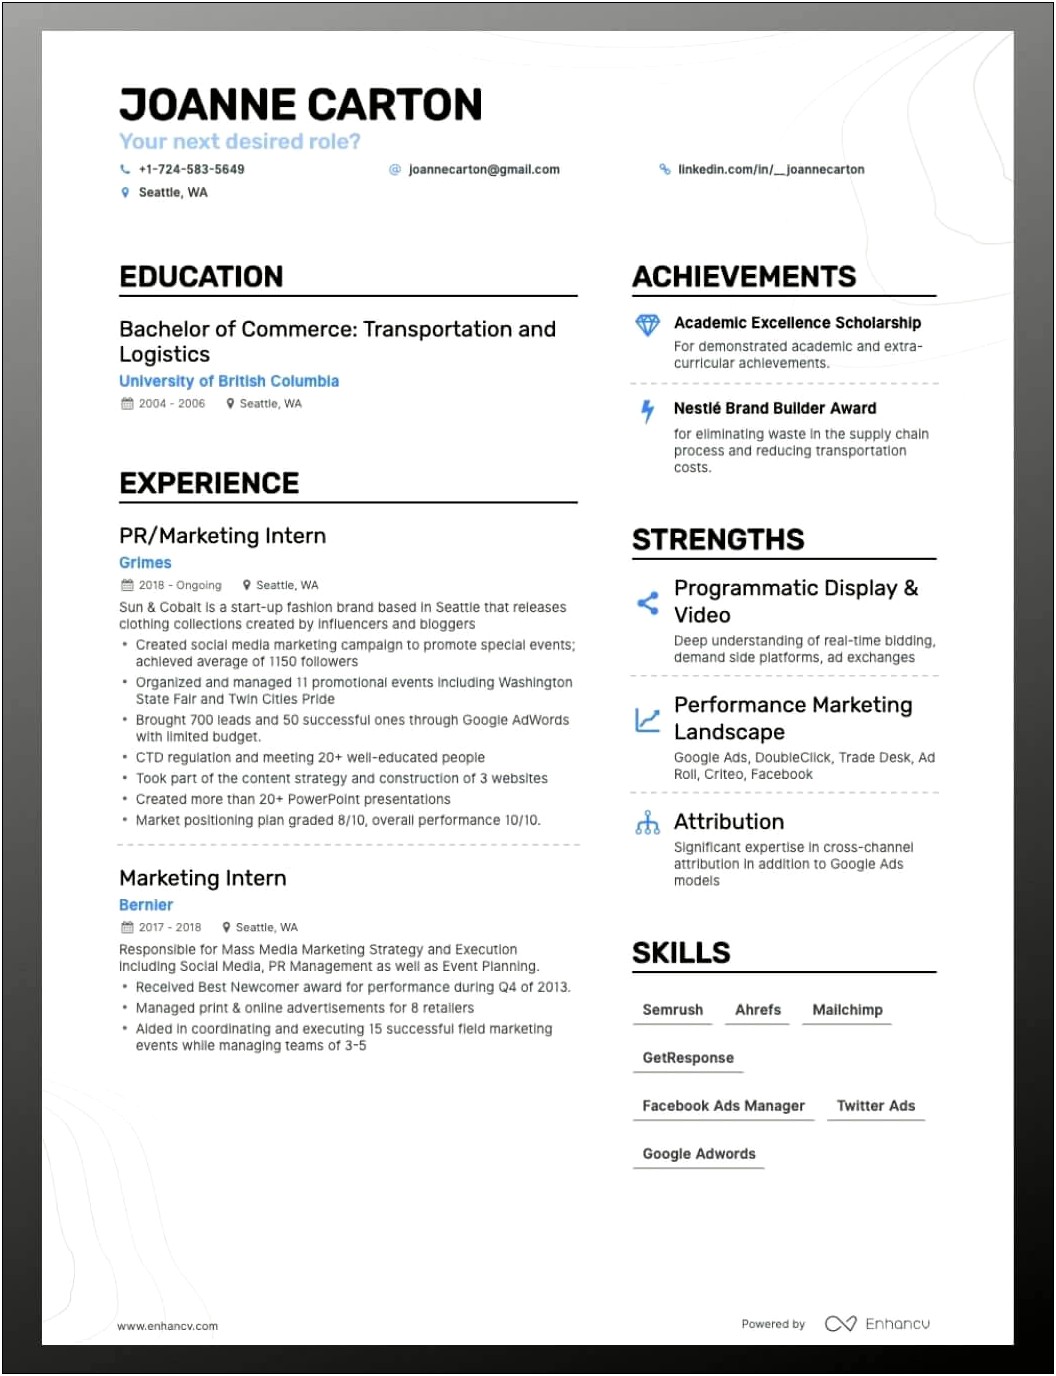 Types Of Skills On A Resume